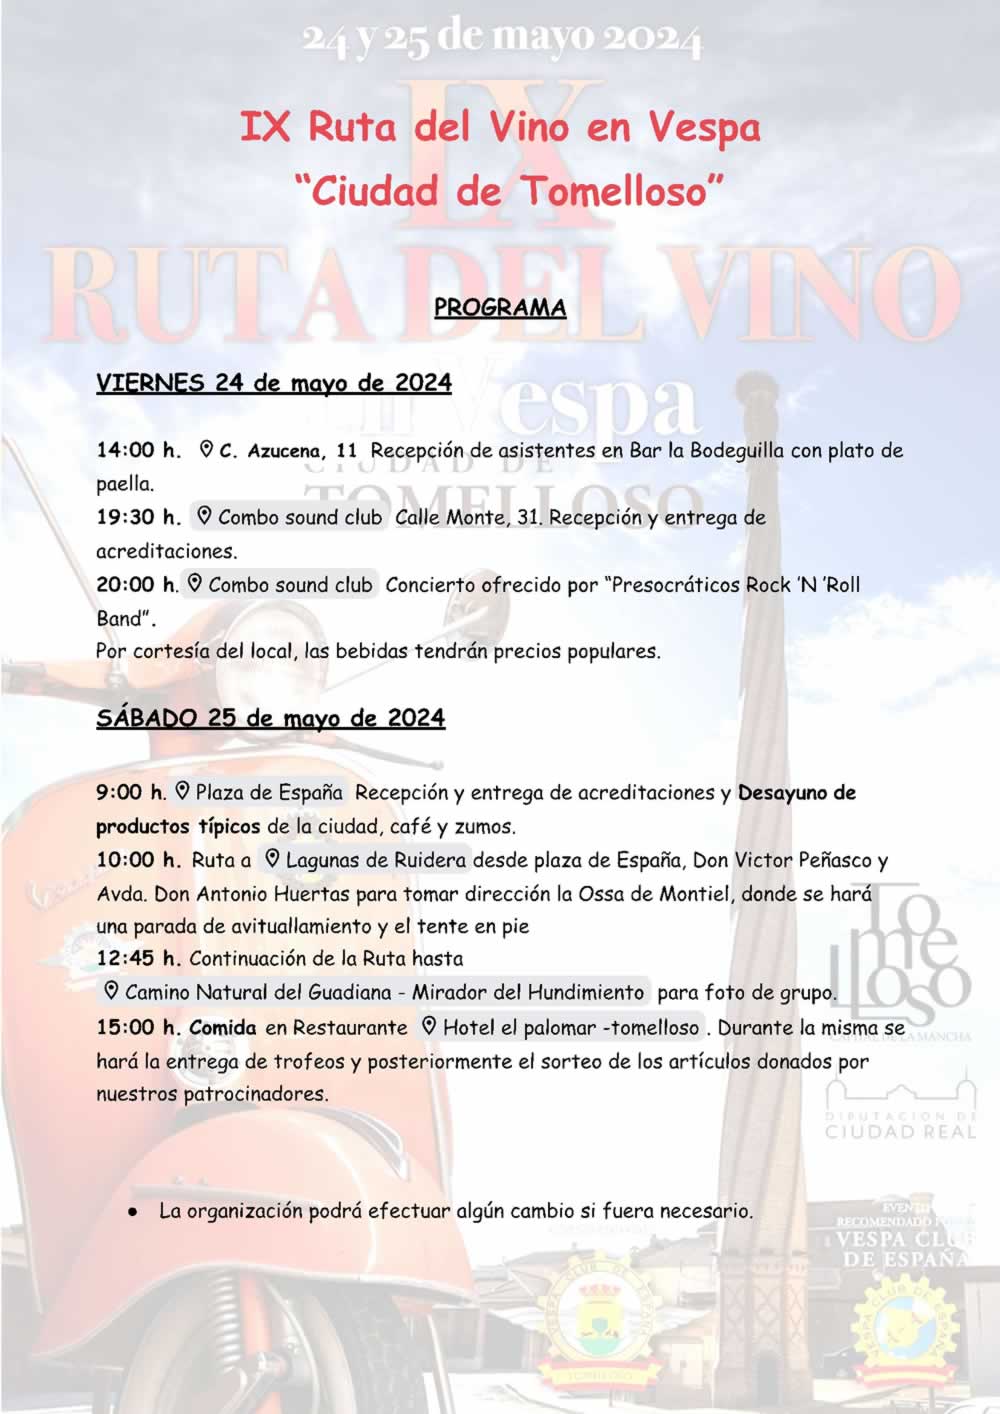 La IX Ruta del Vino en Vespa "Ciudad de Tomelloso" promete un fin de semana inolvidable